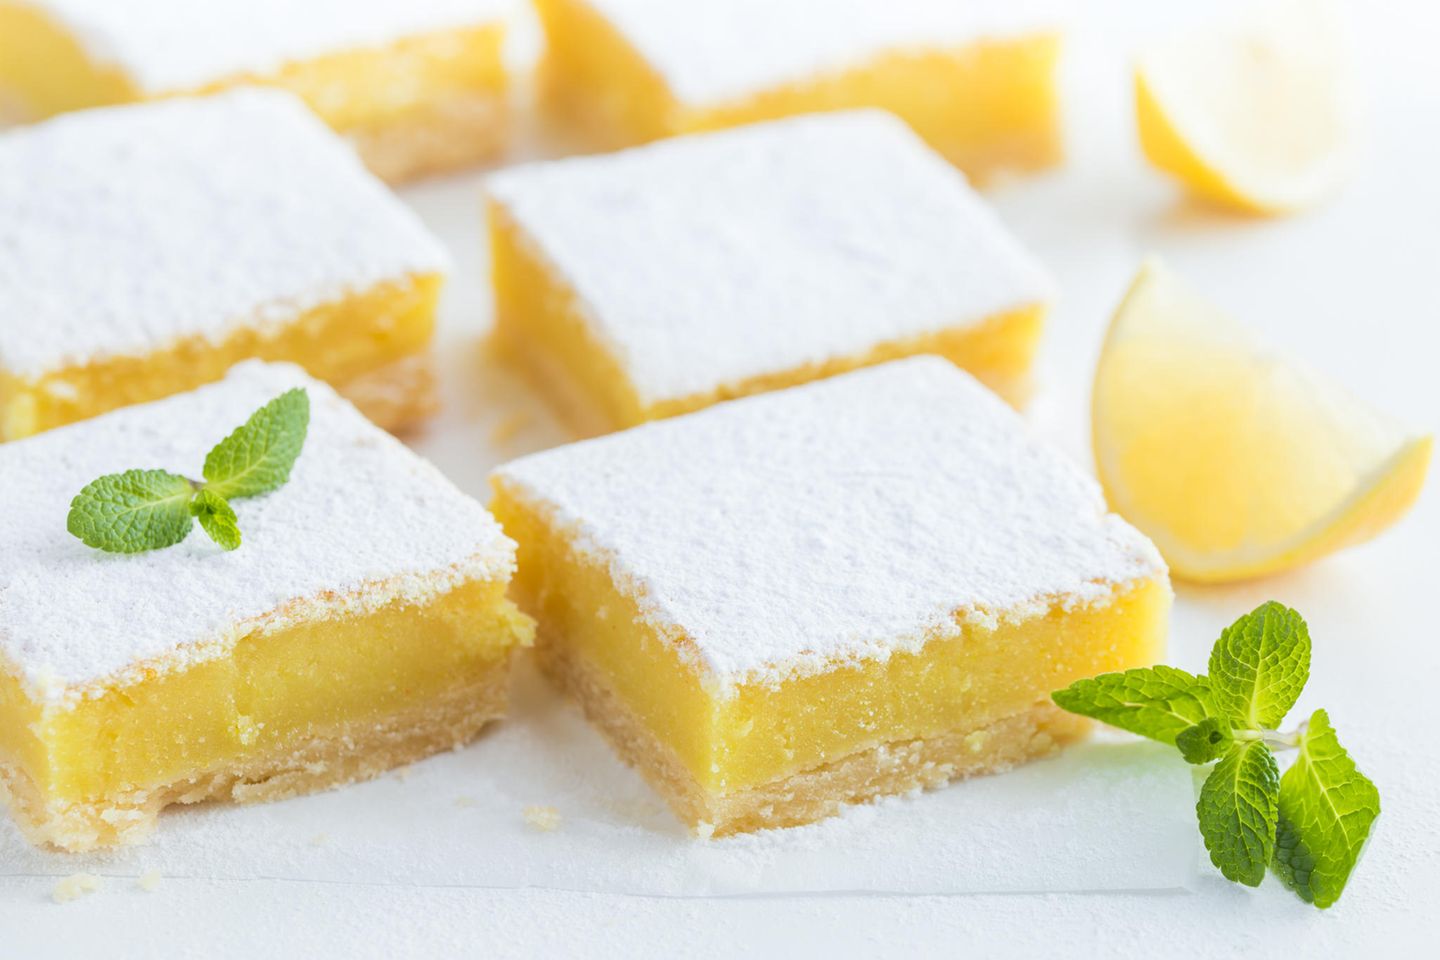 Divine delight: lemon cake arranged on a white tablecloth